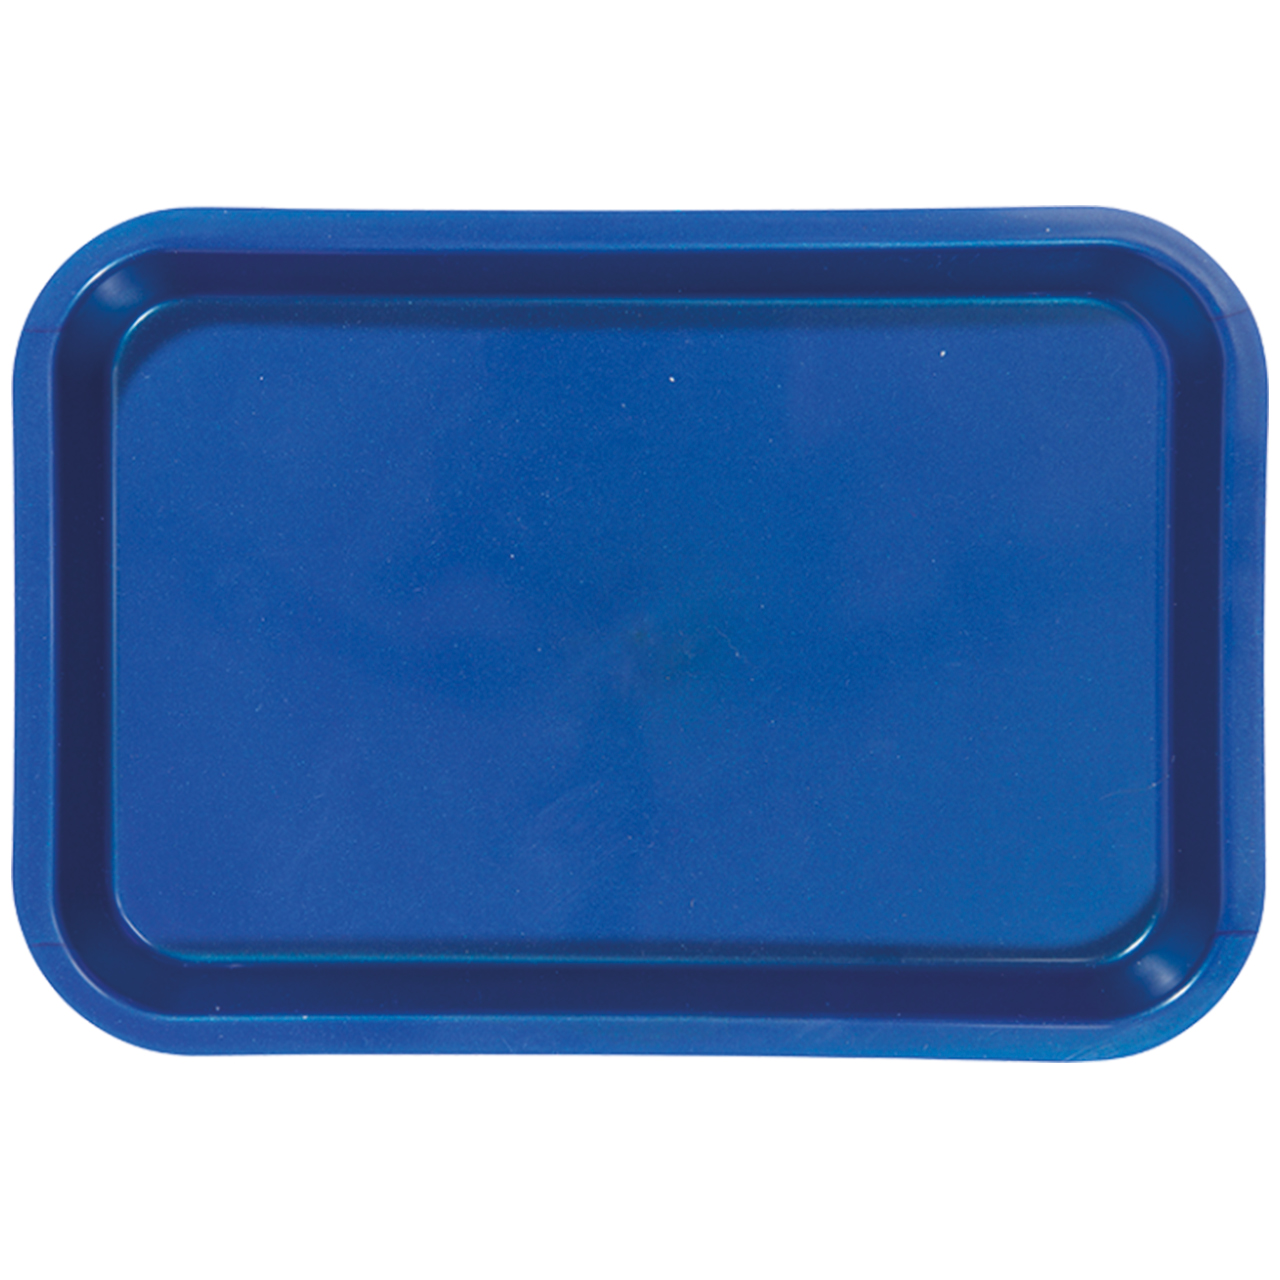 Mini-Tray mit Abdeckhaube blau, BxHxL: 16.2 x 2.4 x 23.7 cm